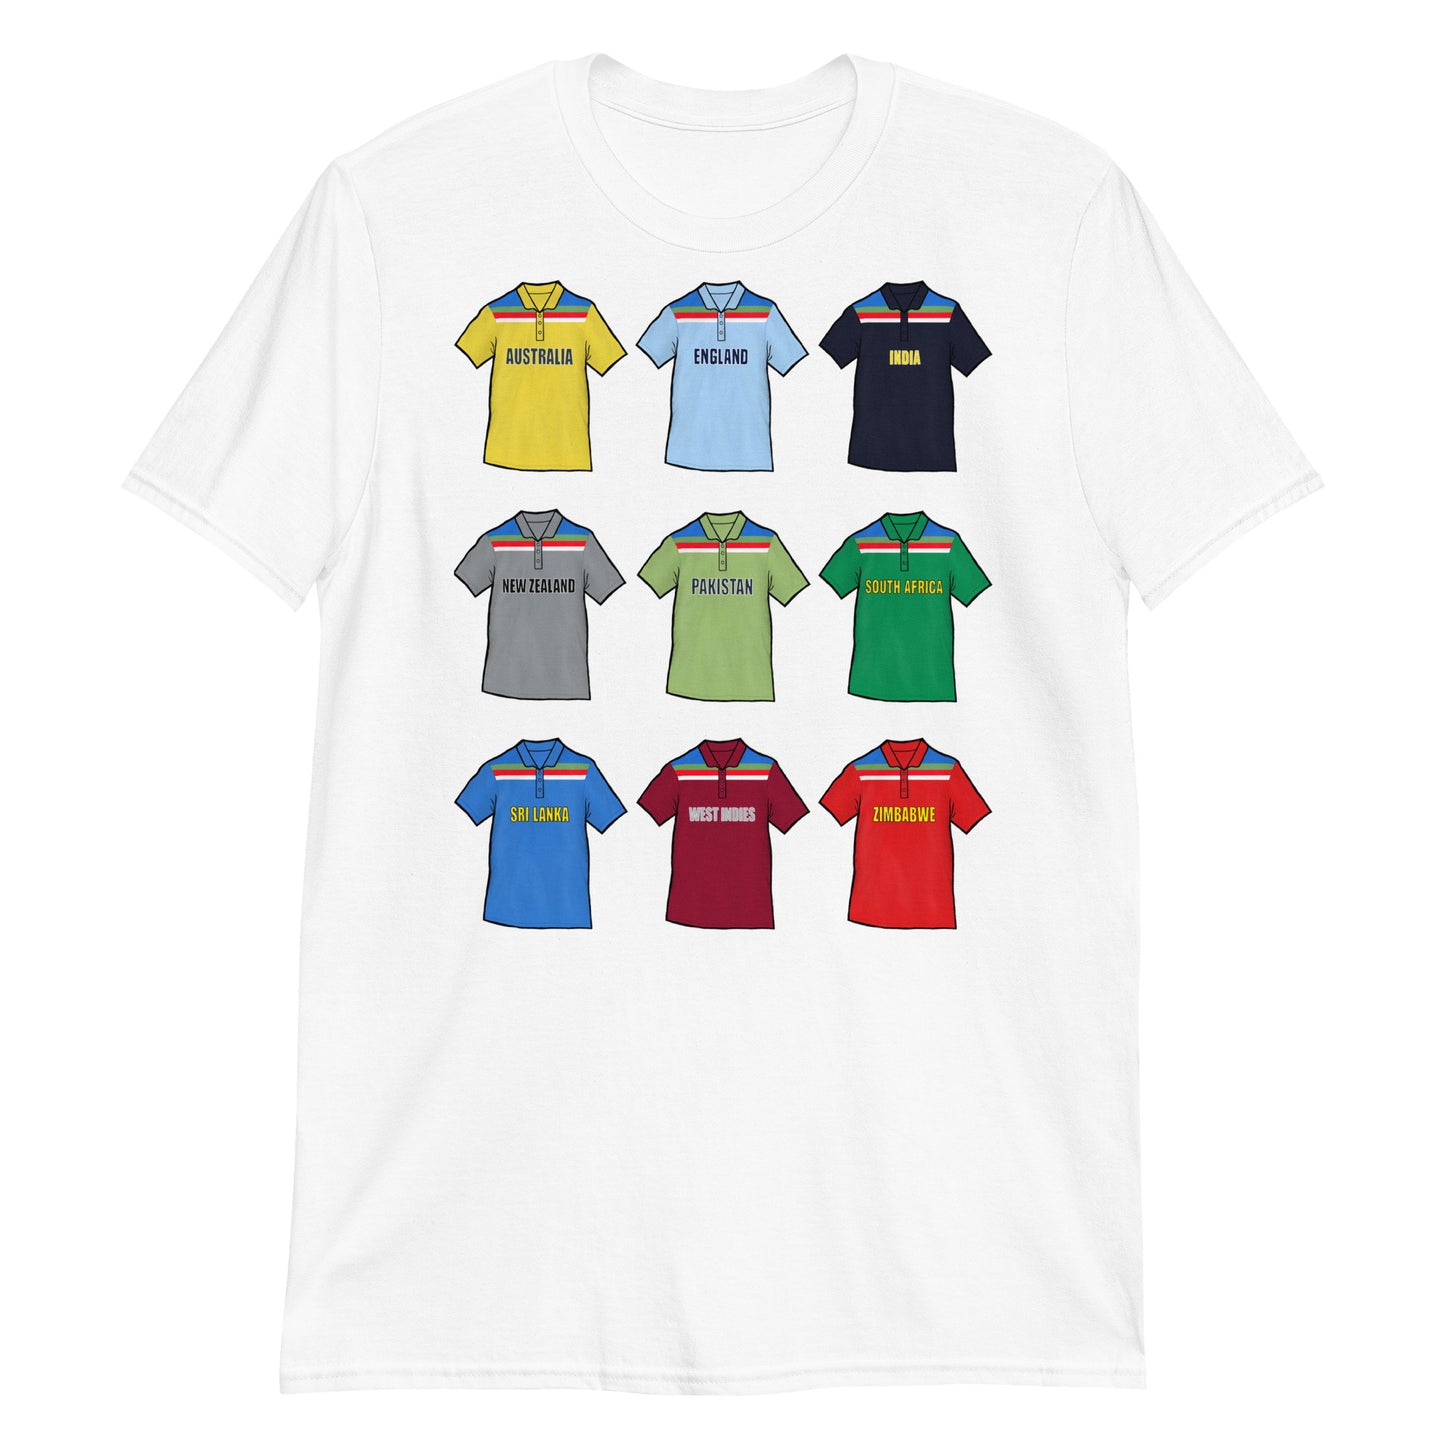 White Cricket T-shirt with illustrated artwork on them. Featuring nations Australia, England, India, New Zealand, Pakistan, South Africa, Sri Lanka, West Indies & Zimbabwe